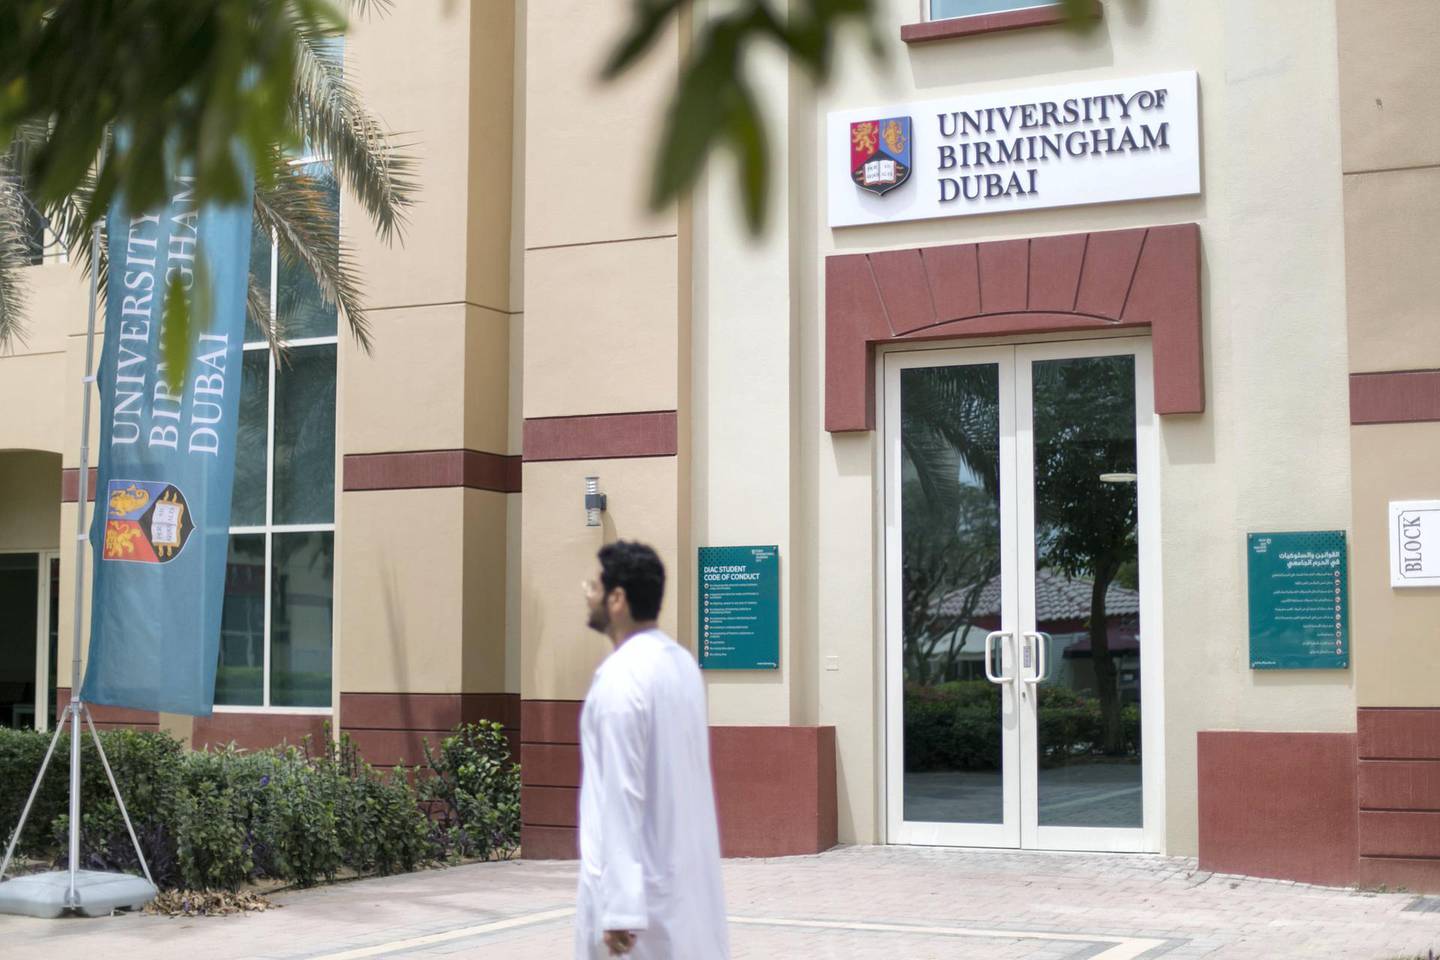 DUBAI, UNITED ARAB EMIRATES - April 11 2019.

University of Birmingham Dubai.

(Photo by Reem Mohammed/The National)

Reporter: Anam Rizvi
Section: NA